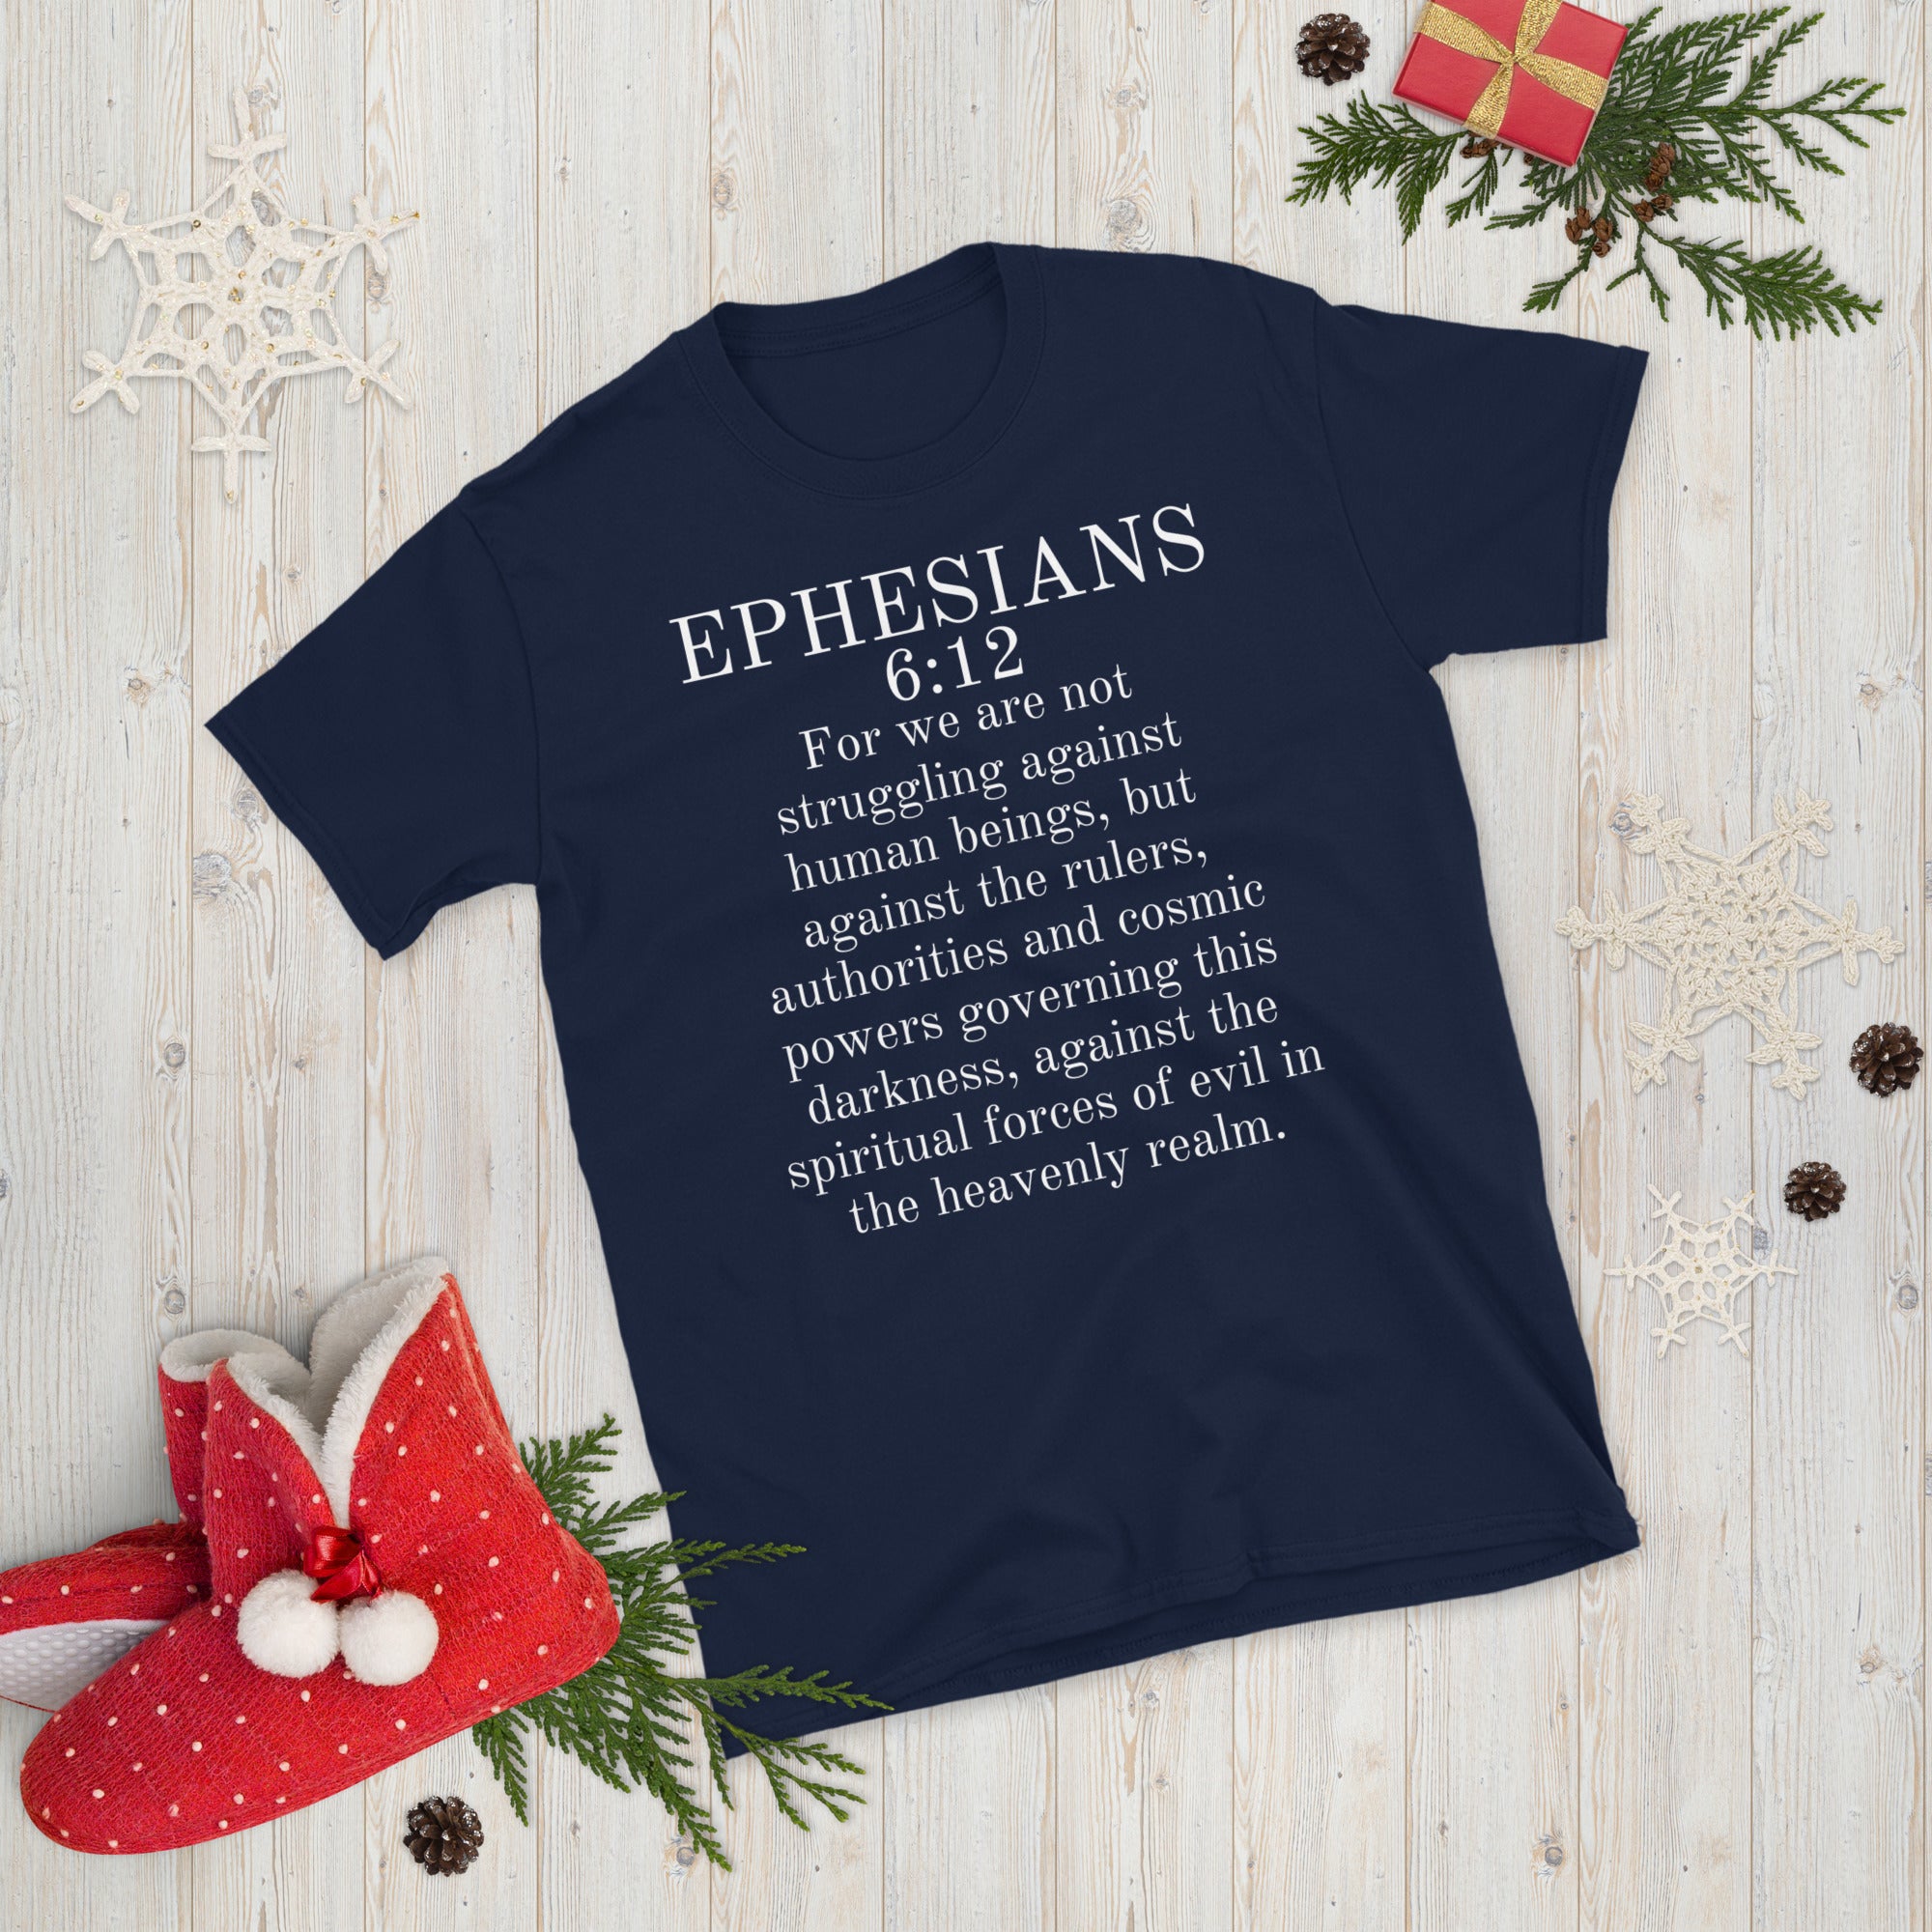 Ephesians 6 12 Shirt, Pastor Gifts, Religious Gifts, Jesus Sweatshirt, God Shirt, Catholic Gifts, Bible Verse Shirt, Christian Gift TShirt - Madeinsea©